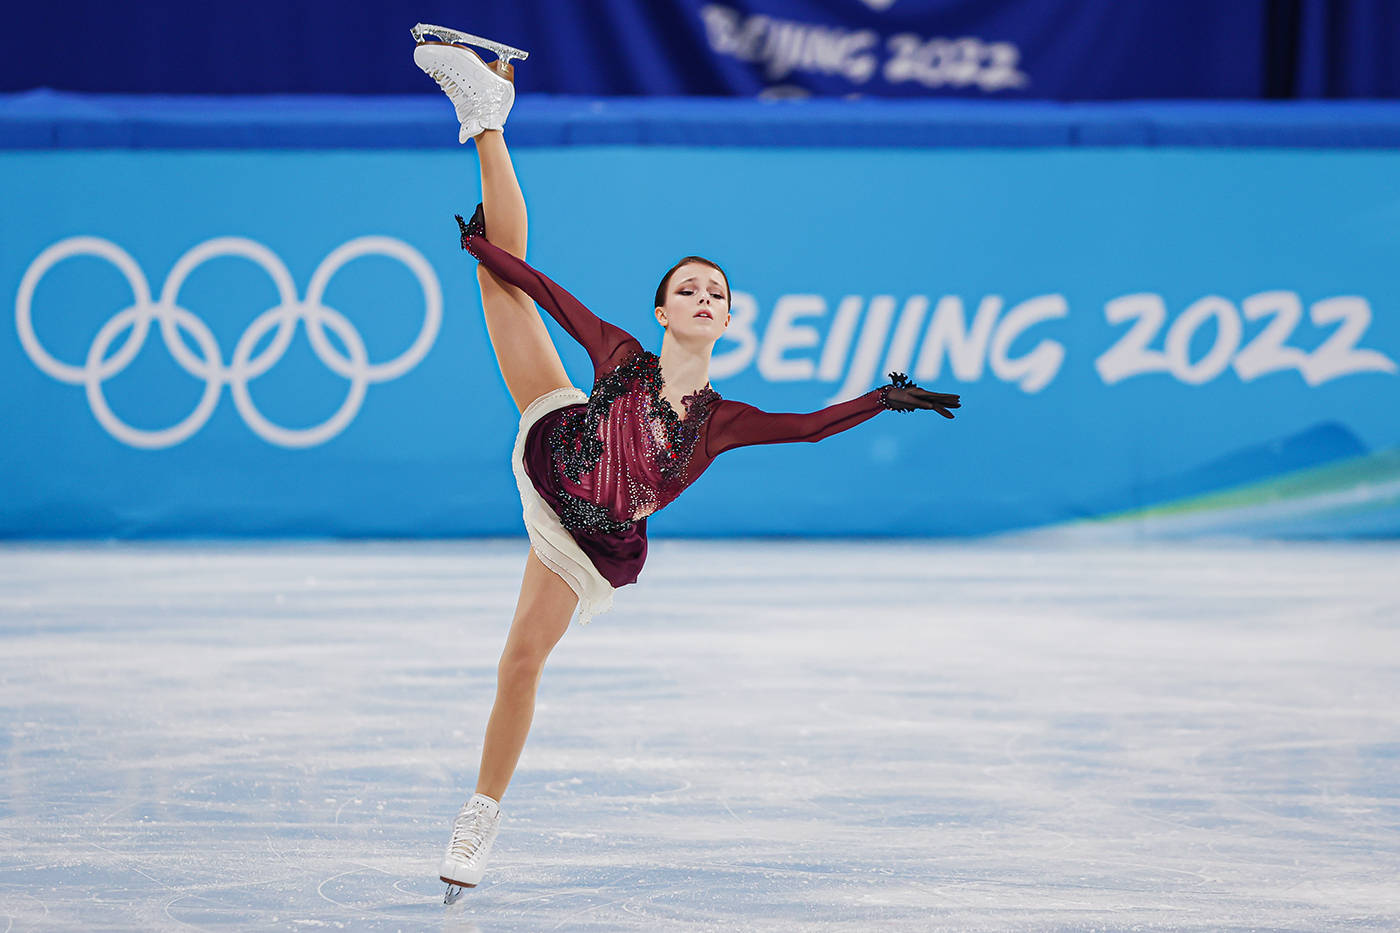 Anna Shcherbakova dazzling at the 2022 Olympics Figure Skating event. Wallpaper